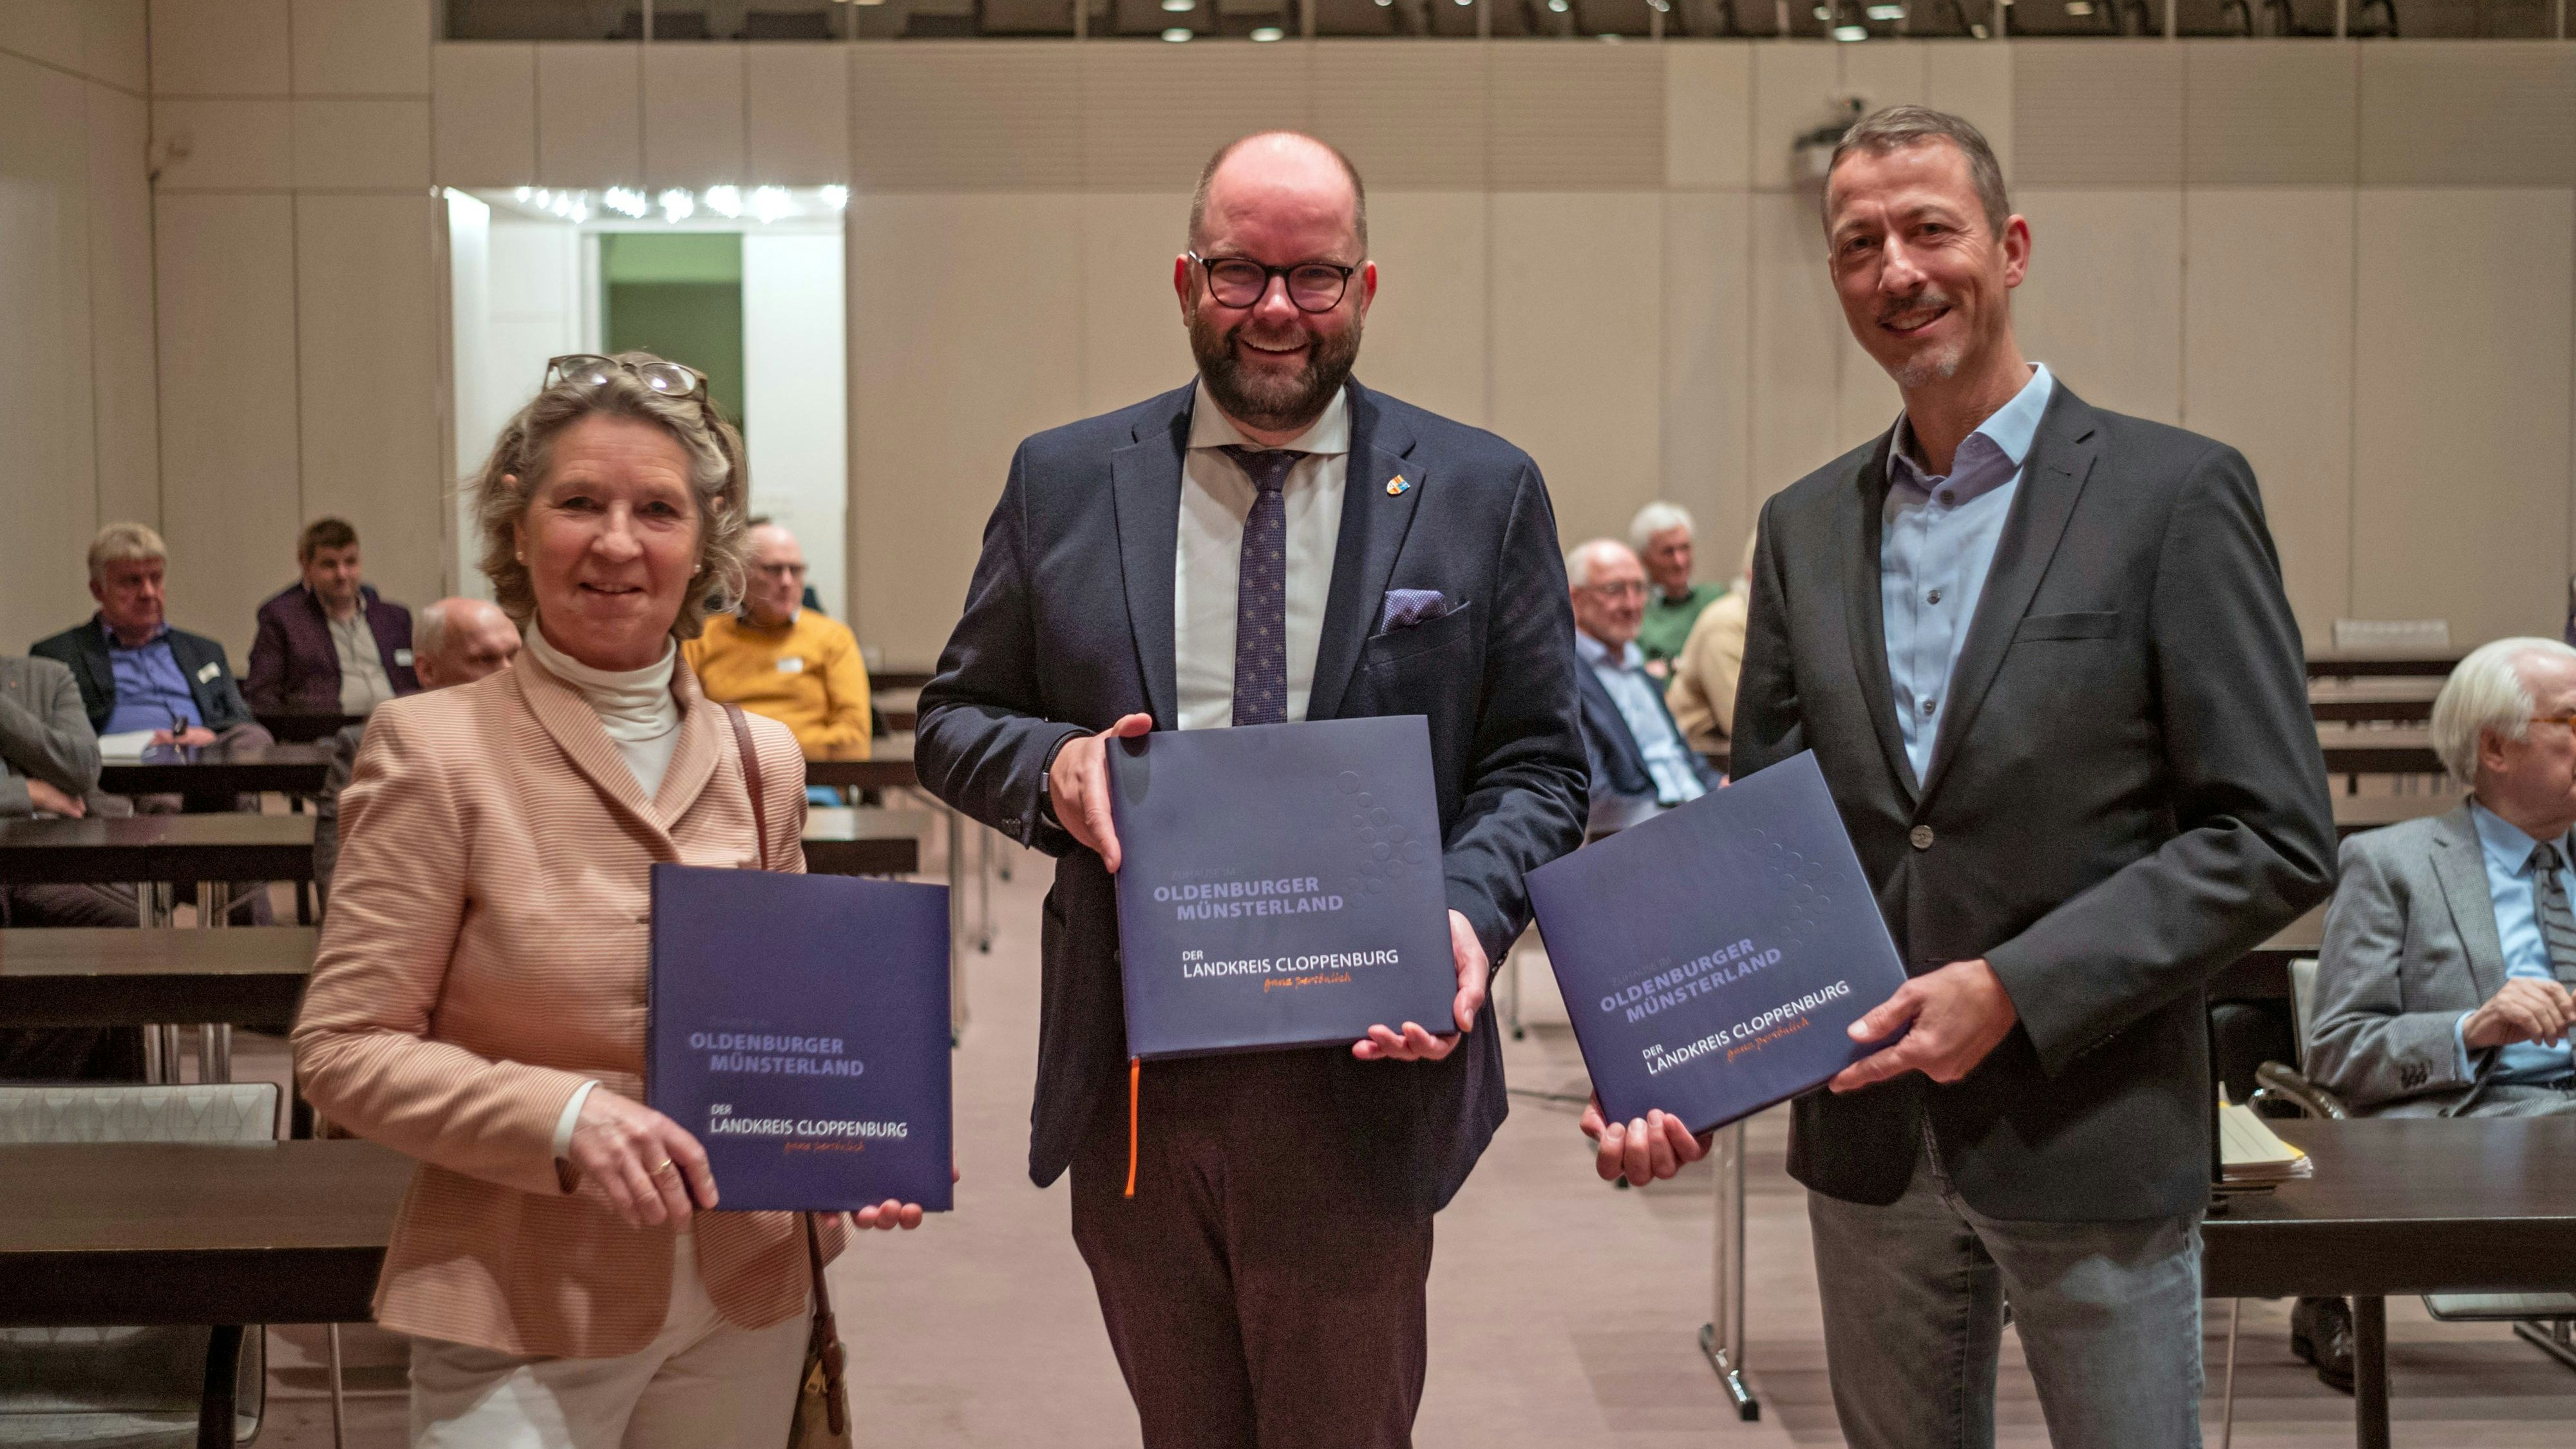 Annette Rebers (neomedia Verlag, von links), Landrat Johann Wimberg und Christian Rolke (neomedia Verlag) stellen das neue Landkreis-Buch offiziell vor. Foto: M. Hibbeler